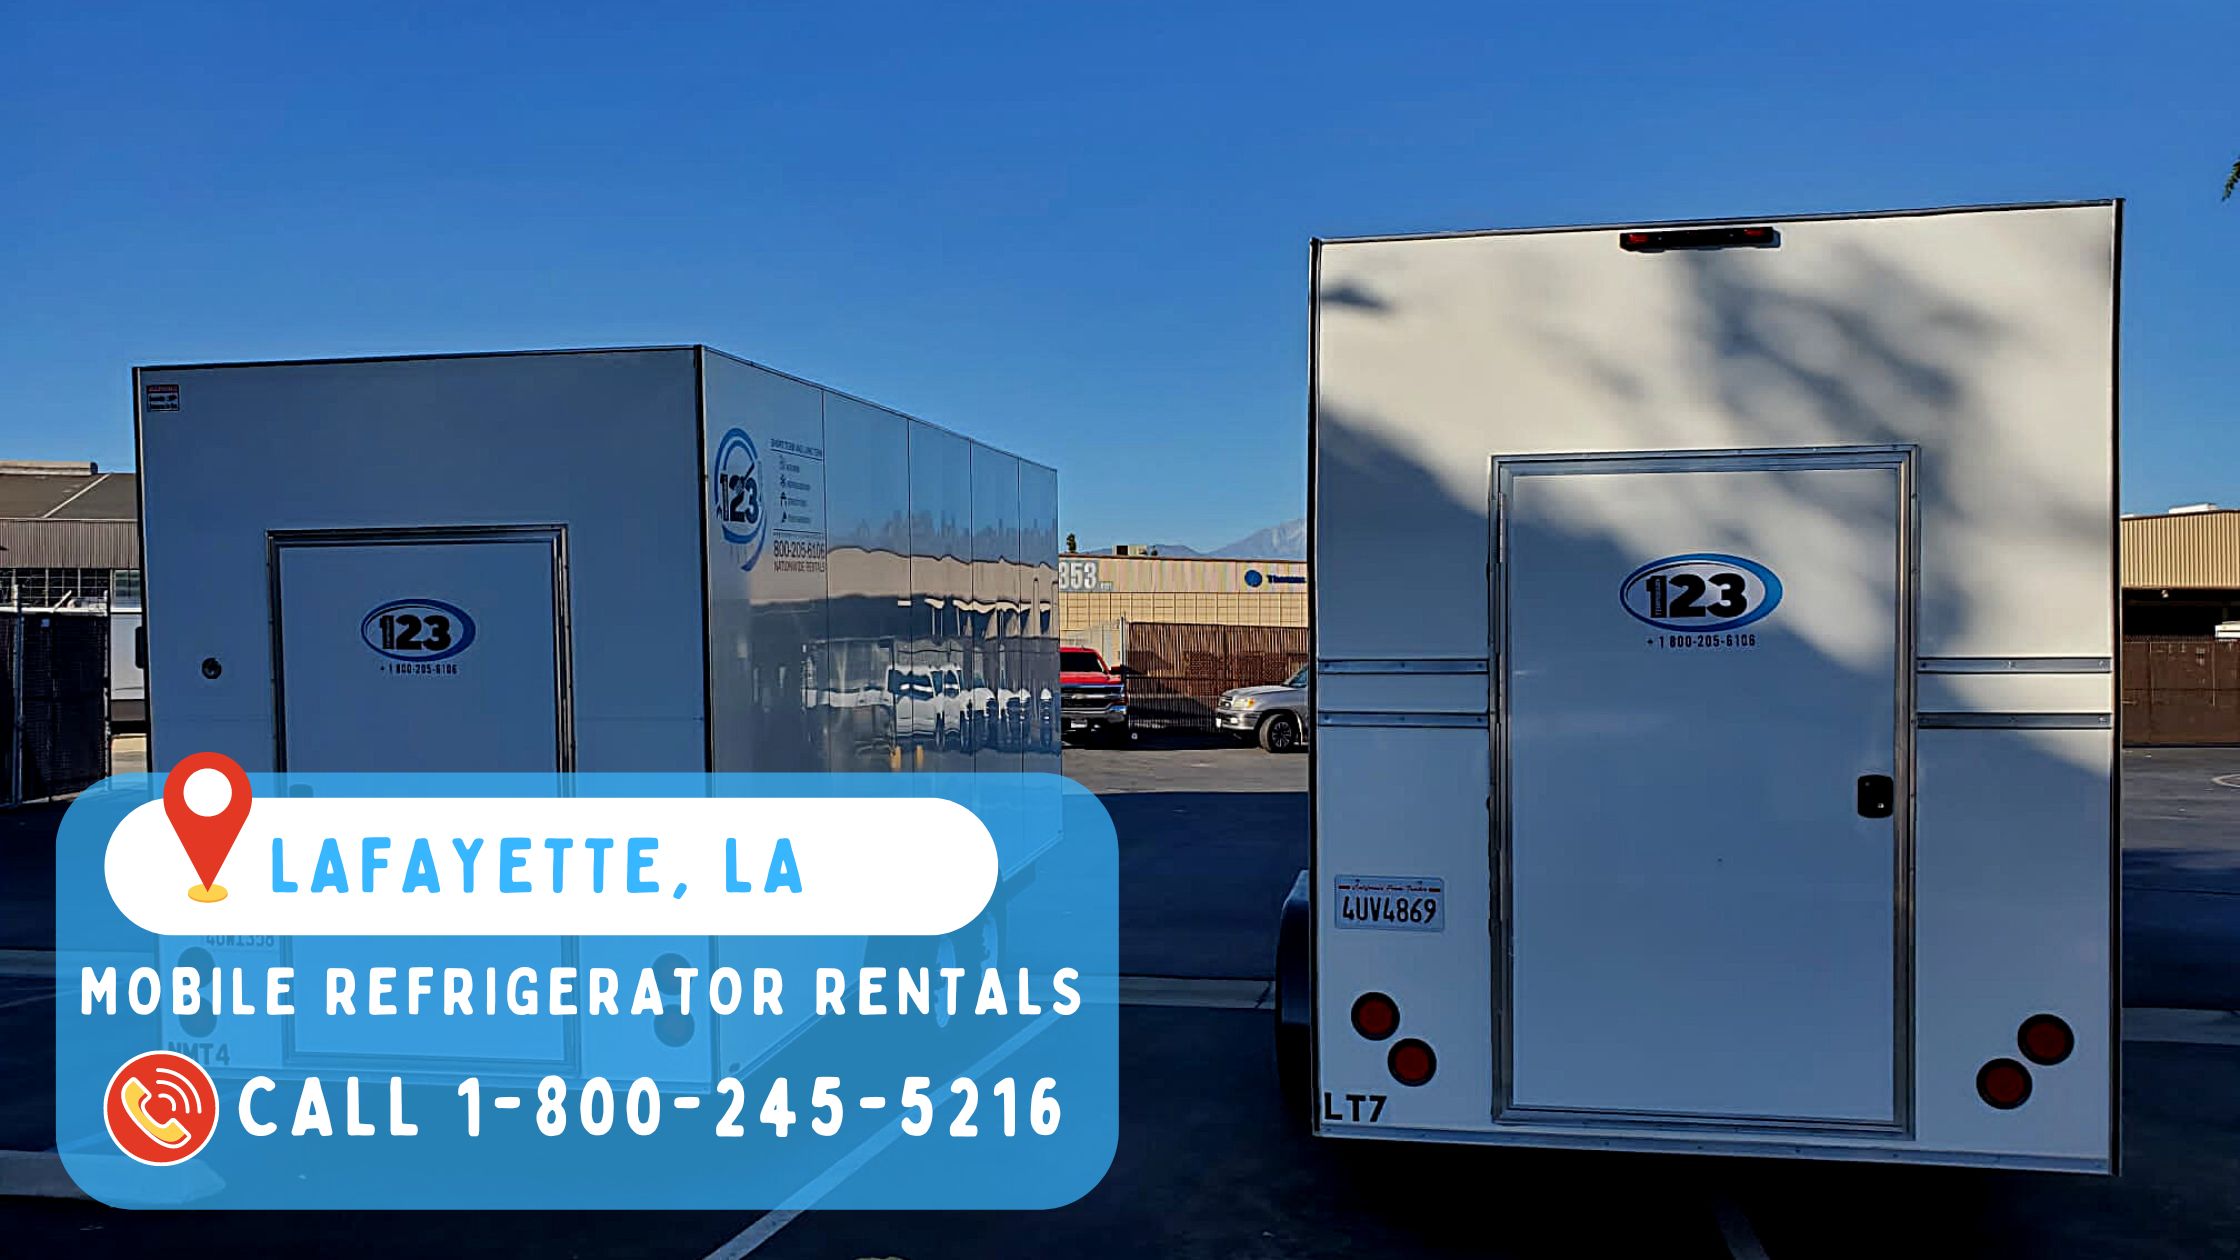 Mobile refrigerator rentals in Lafayette